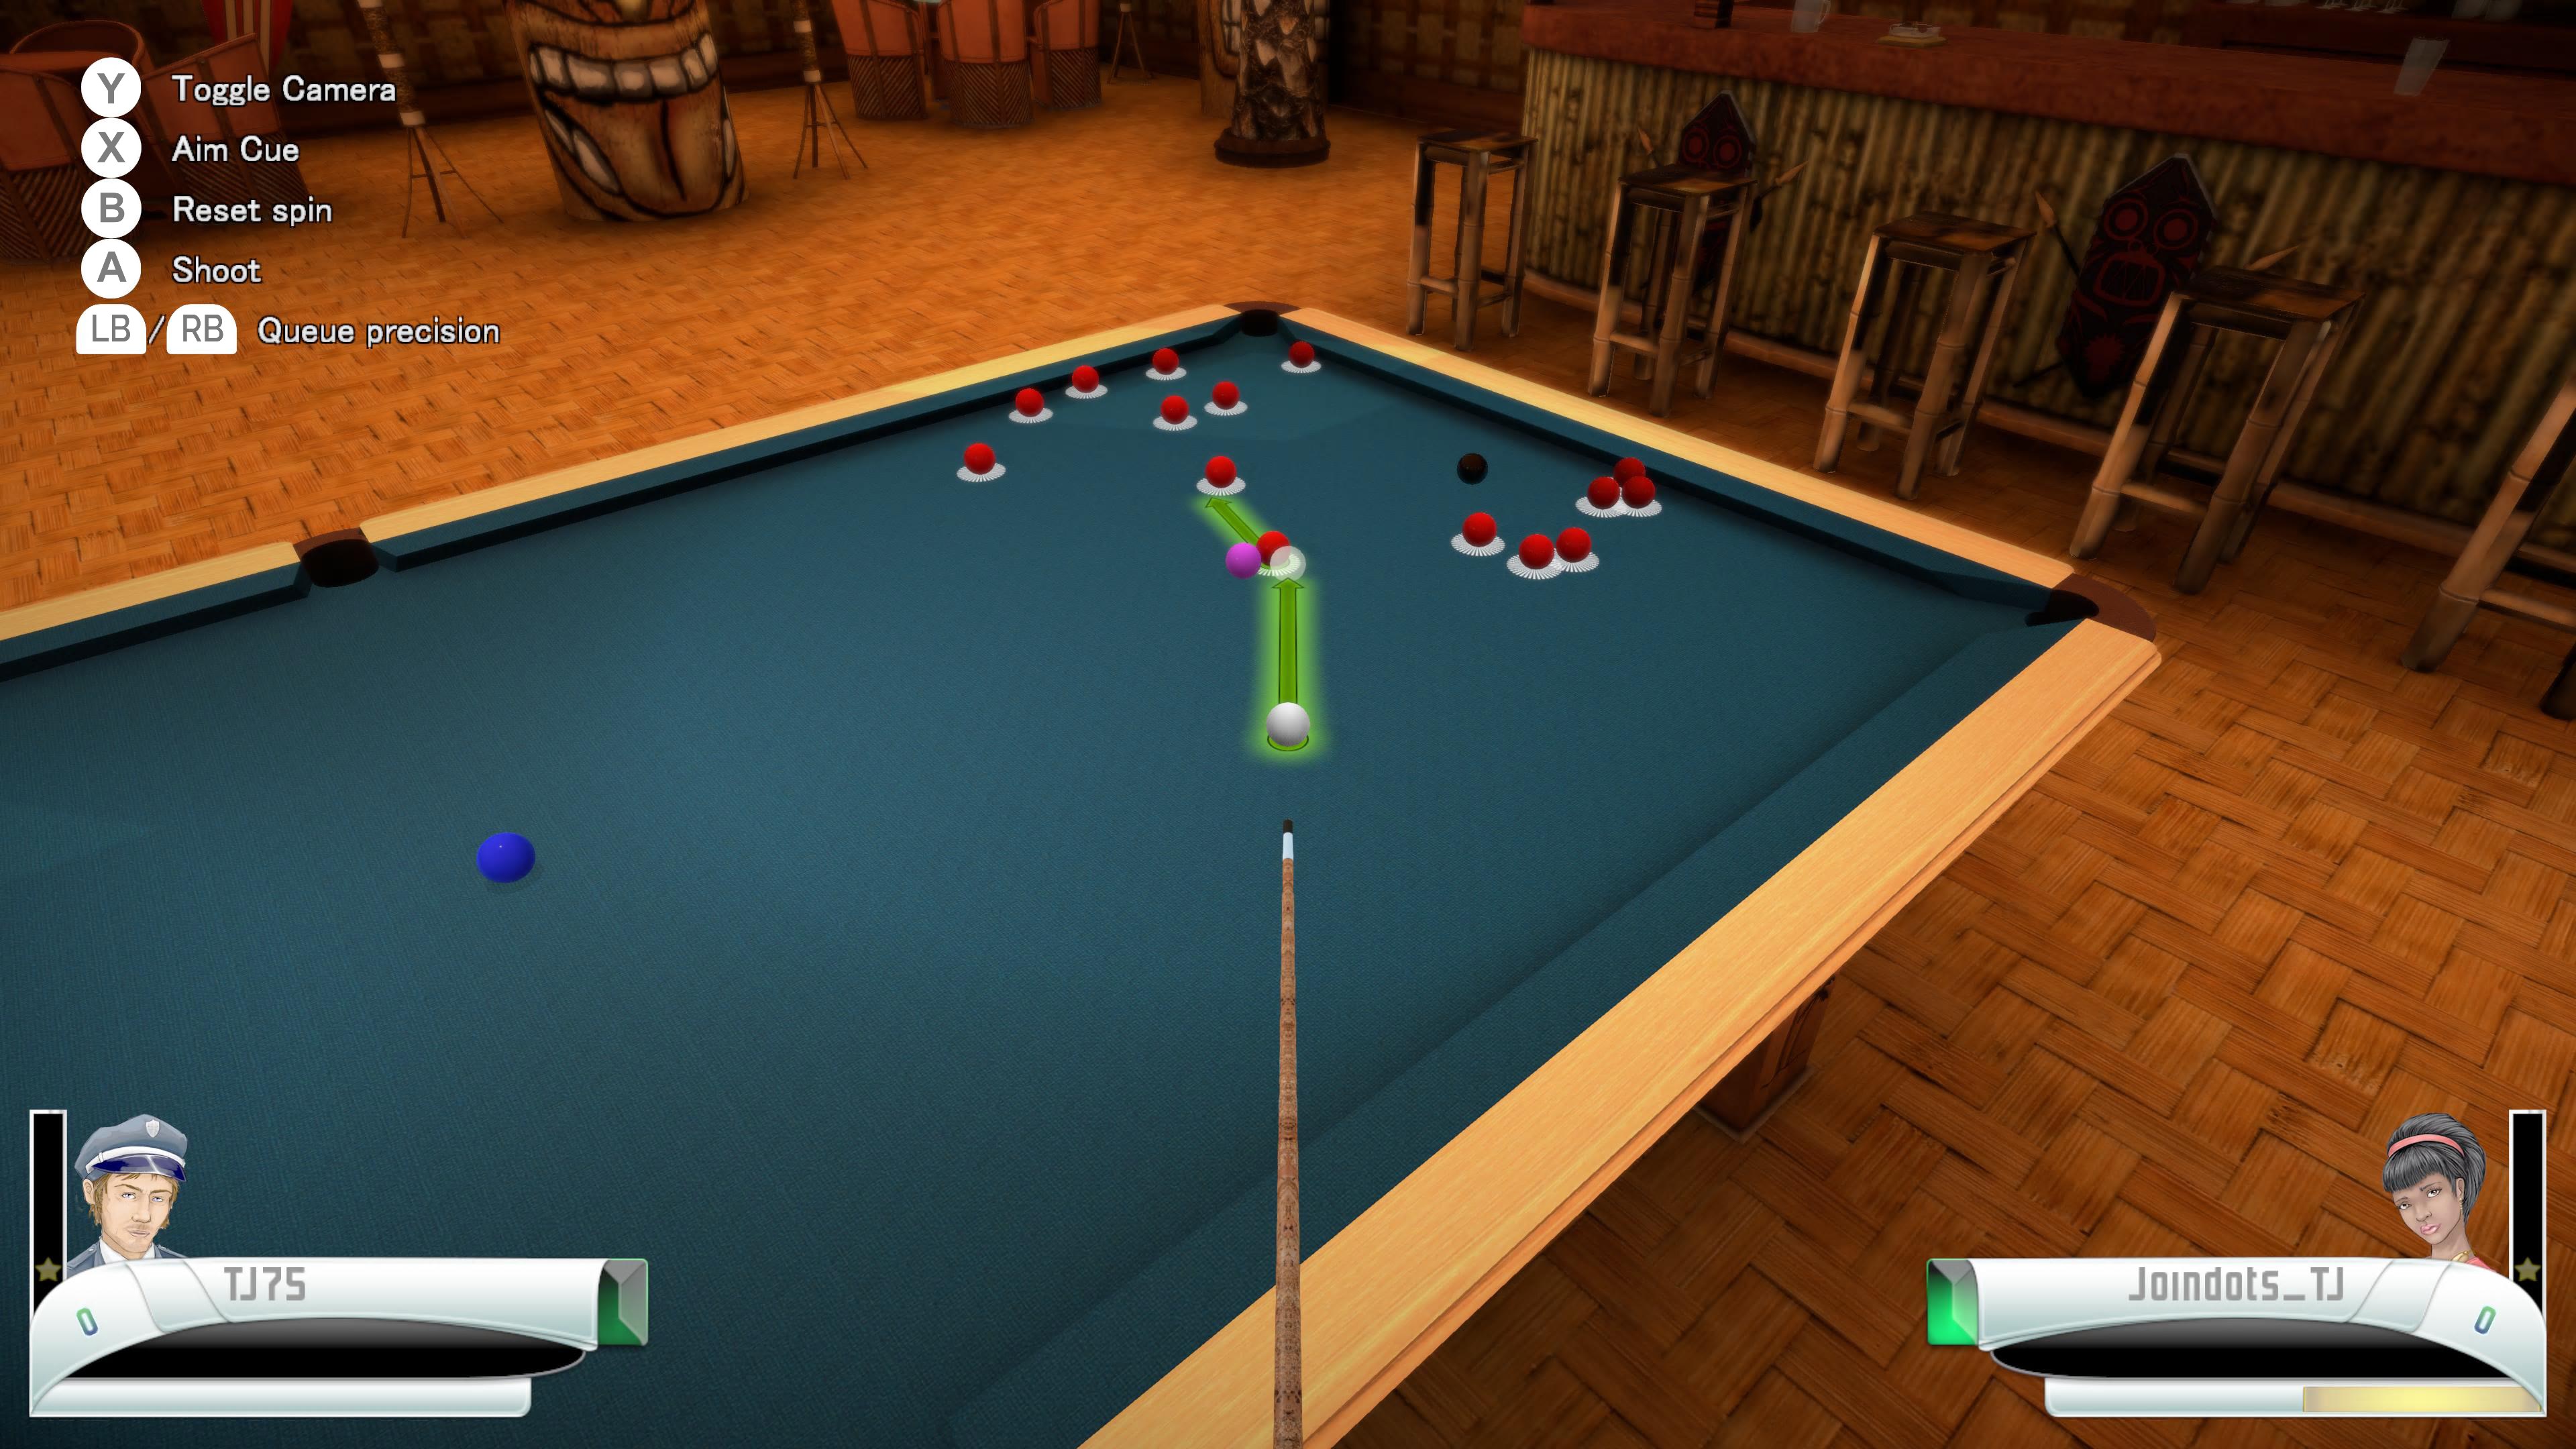 3D Billiards - Pool & Snooker - Remastered screenshot 41024